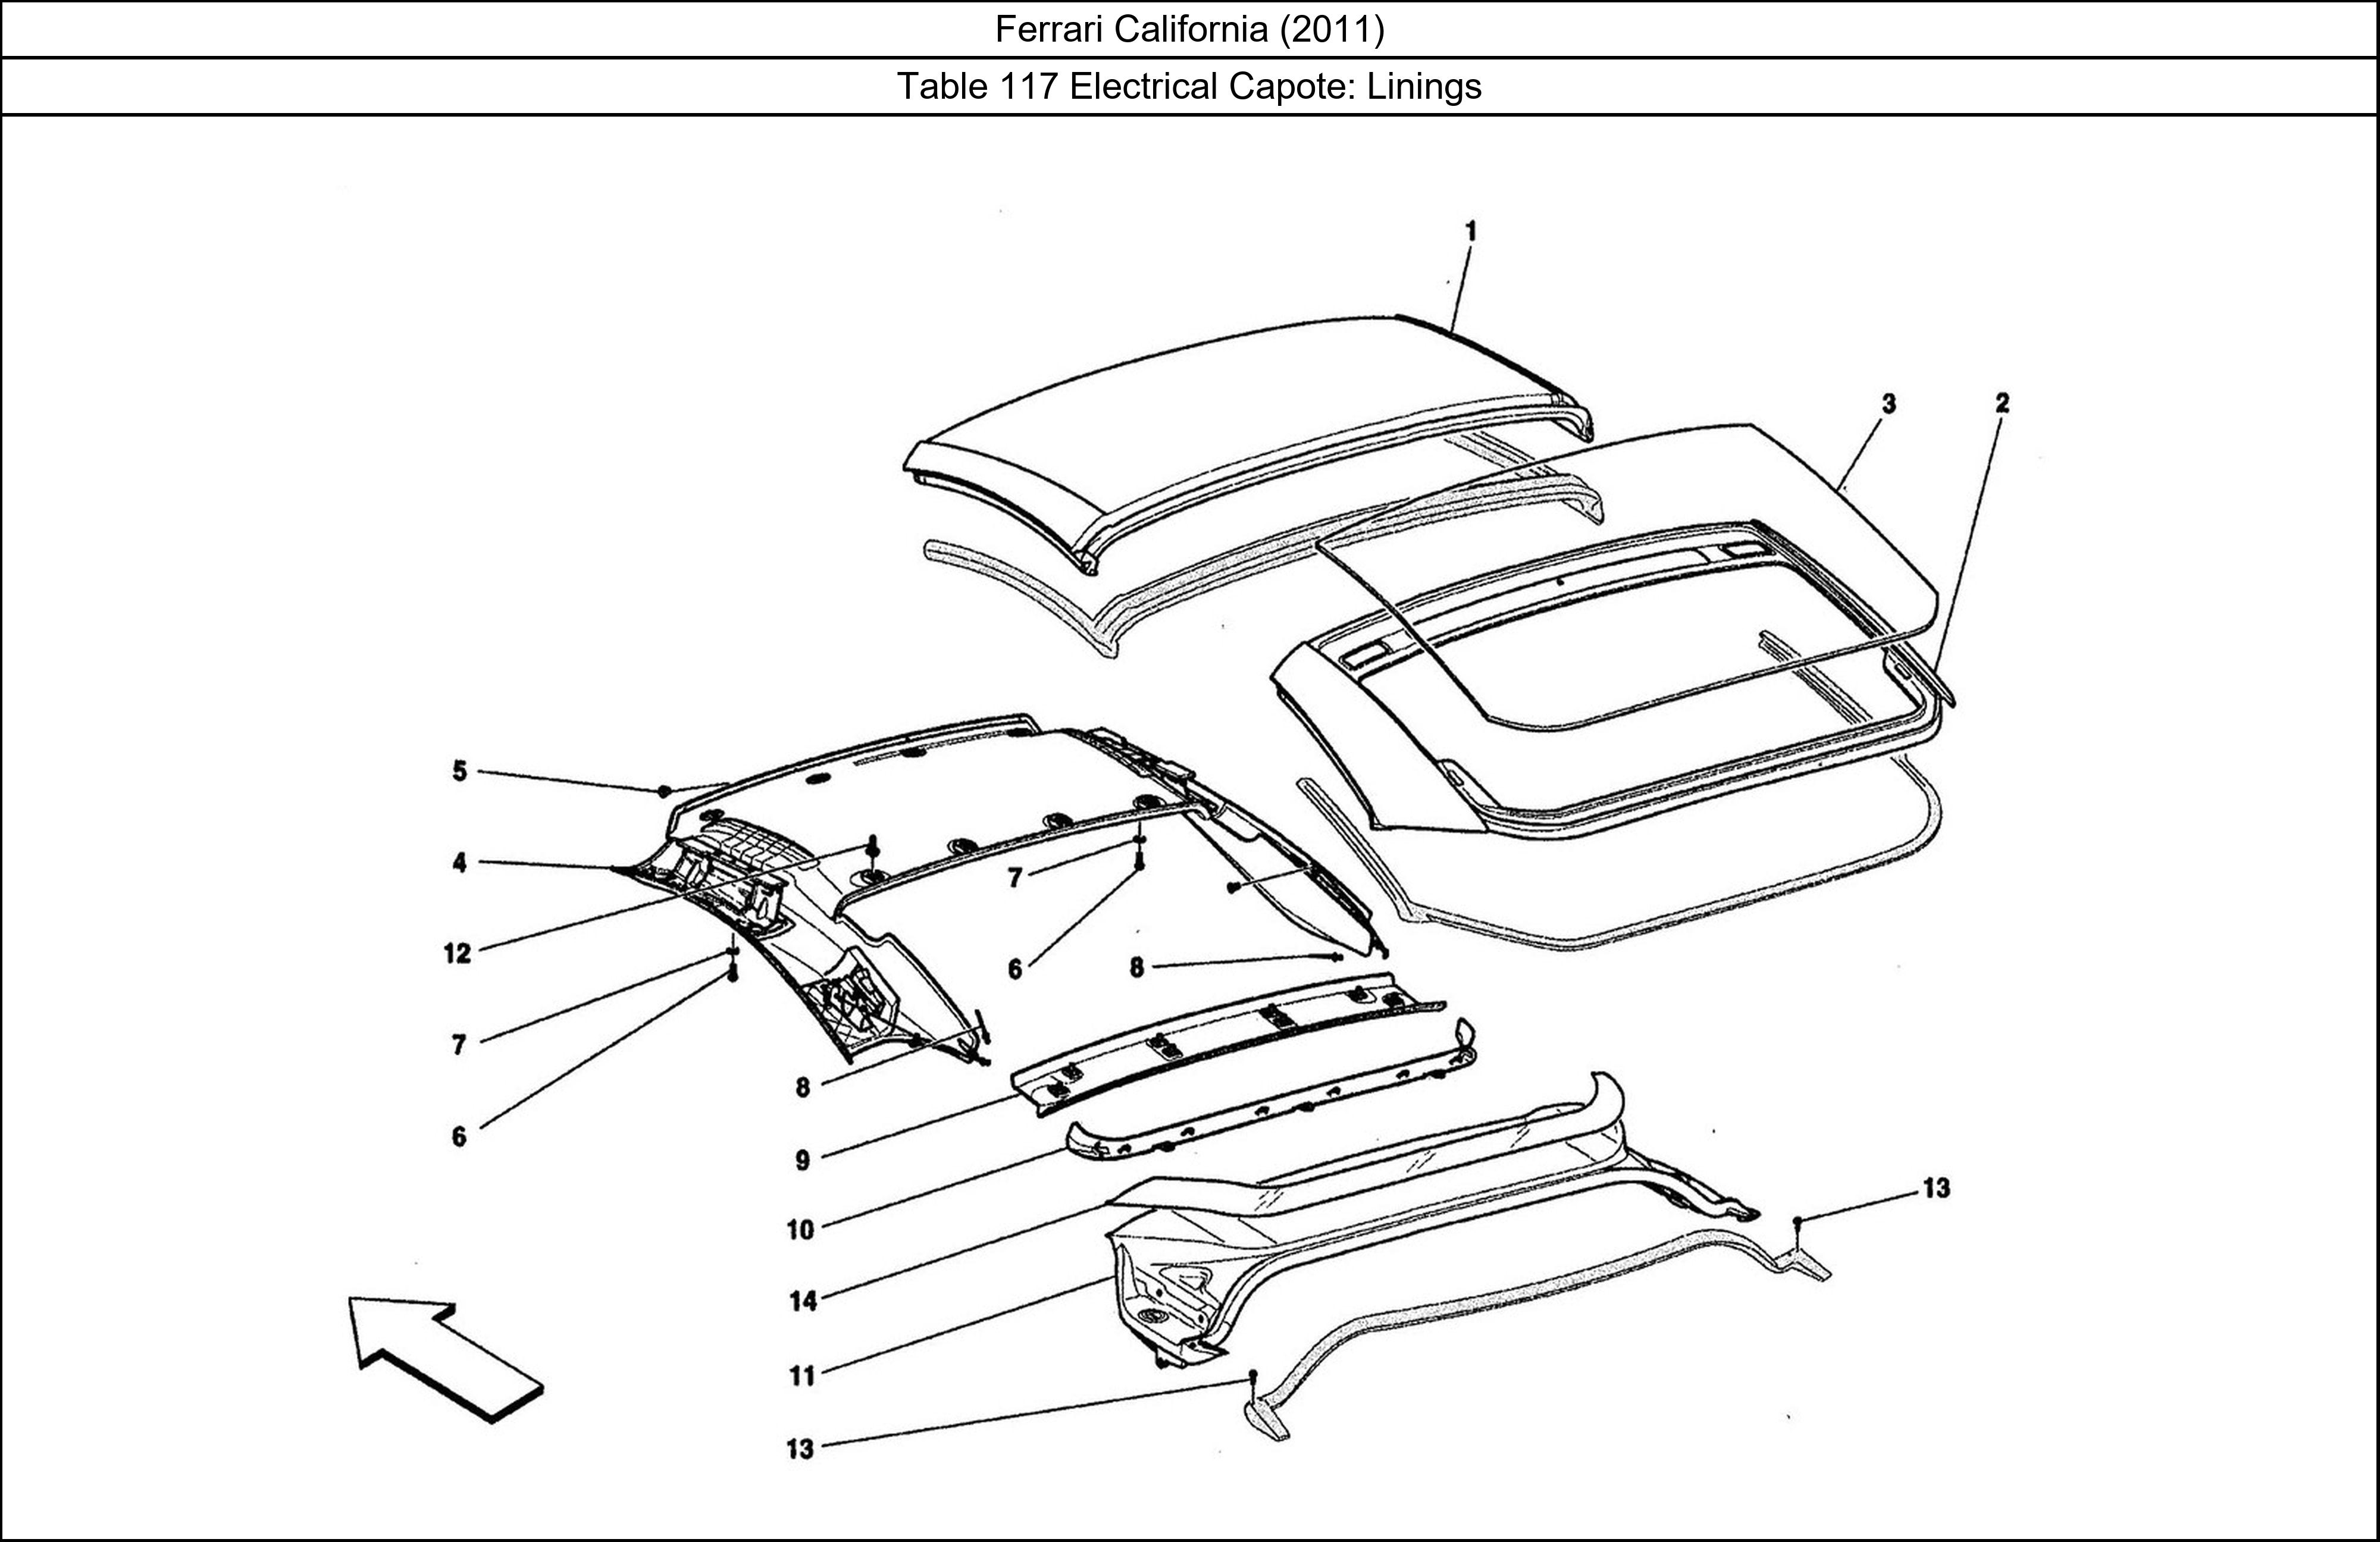 Ferrari Parts Ferrari California (2011) Table 117 Electrical Capote: Linings